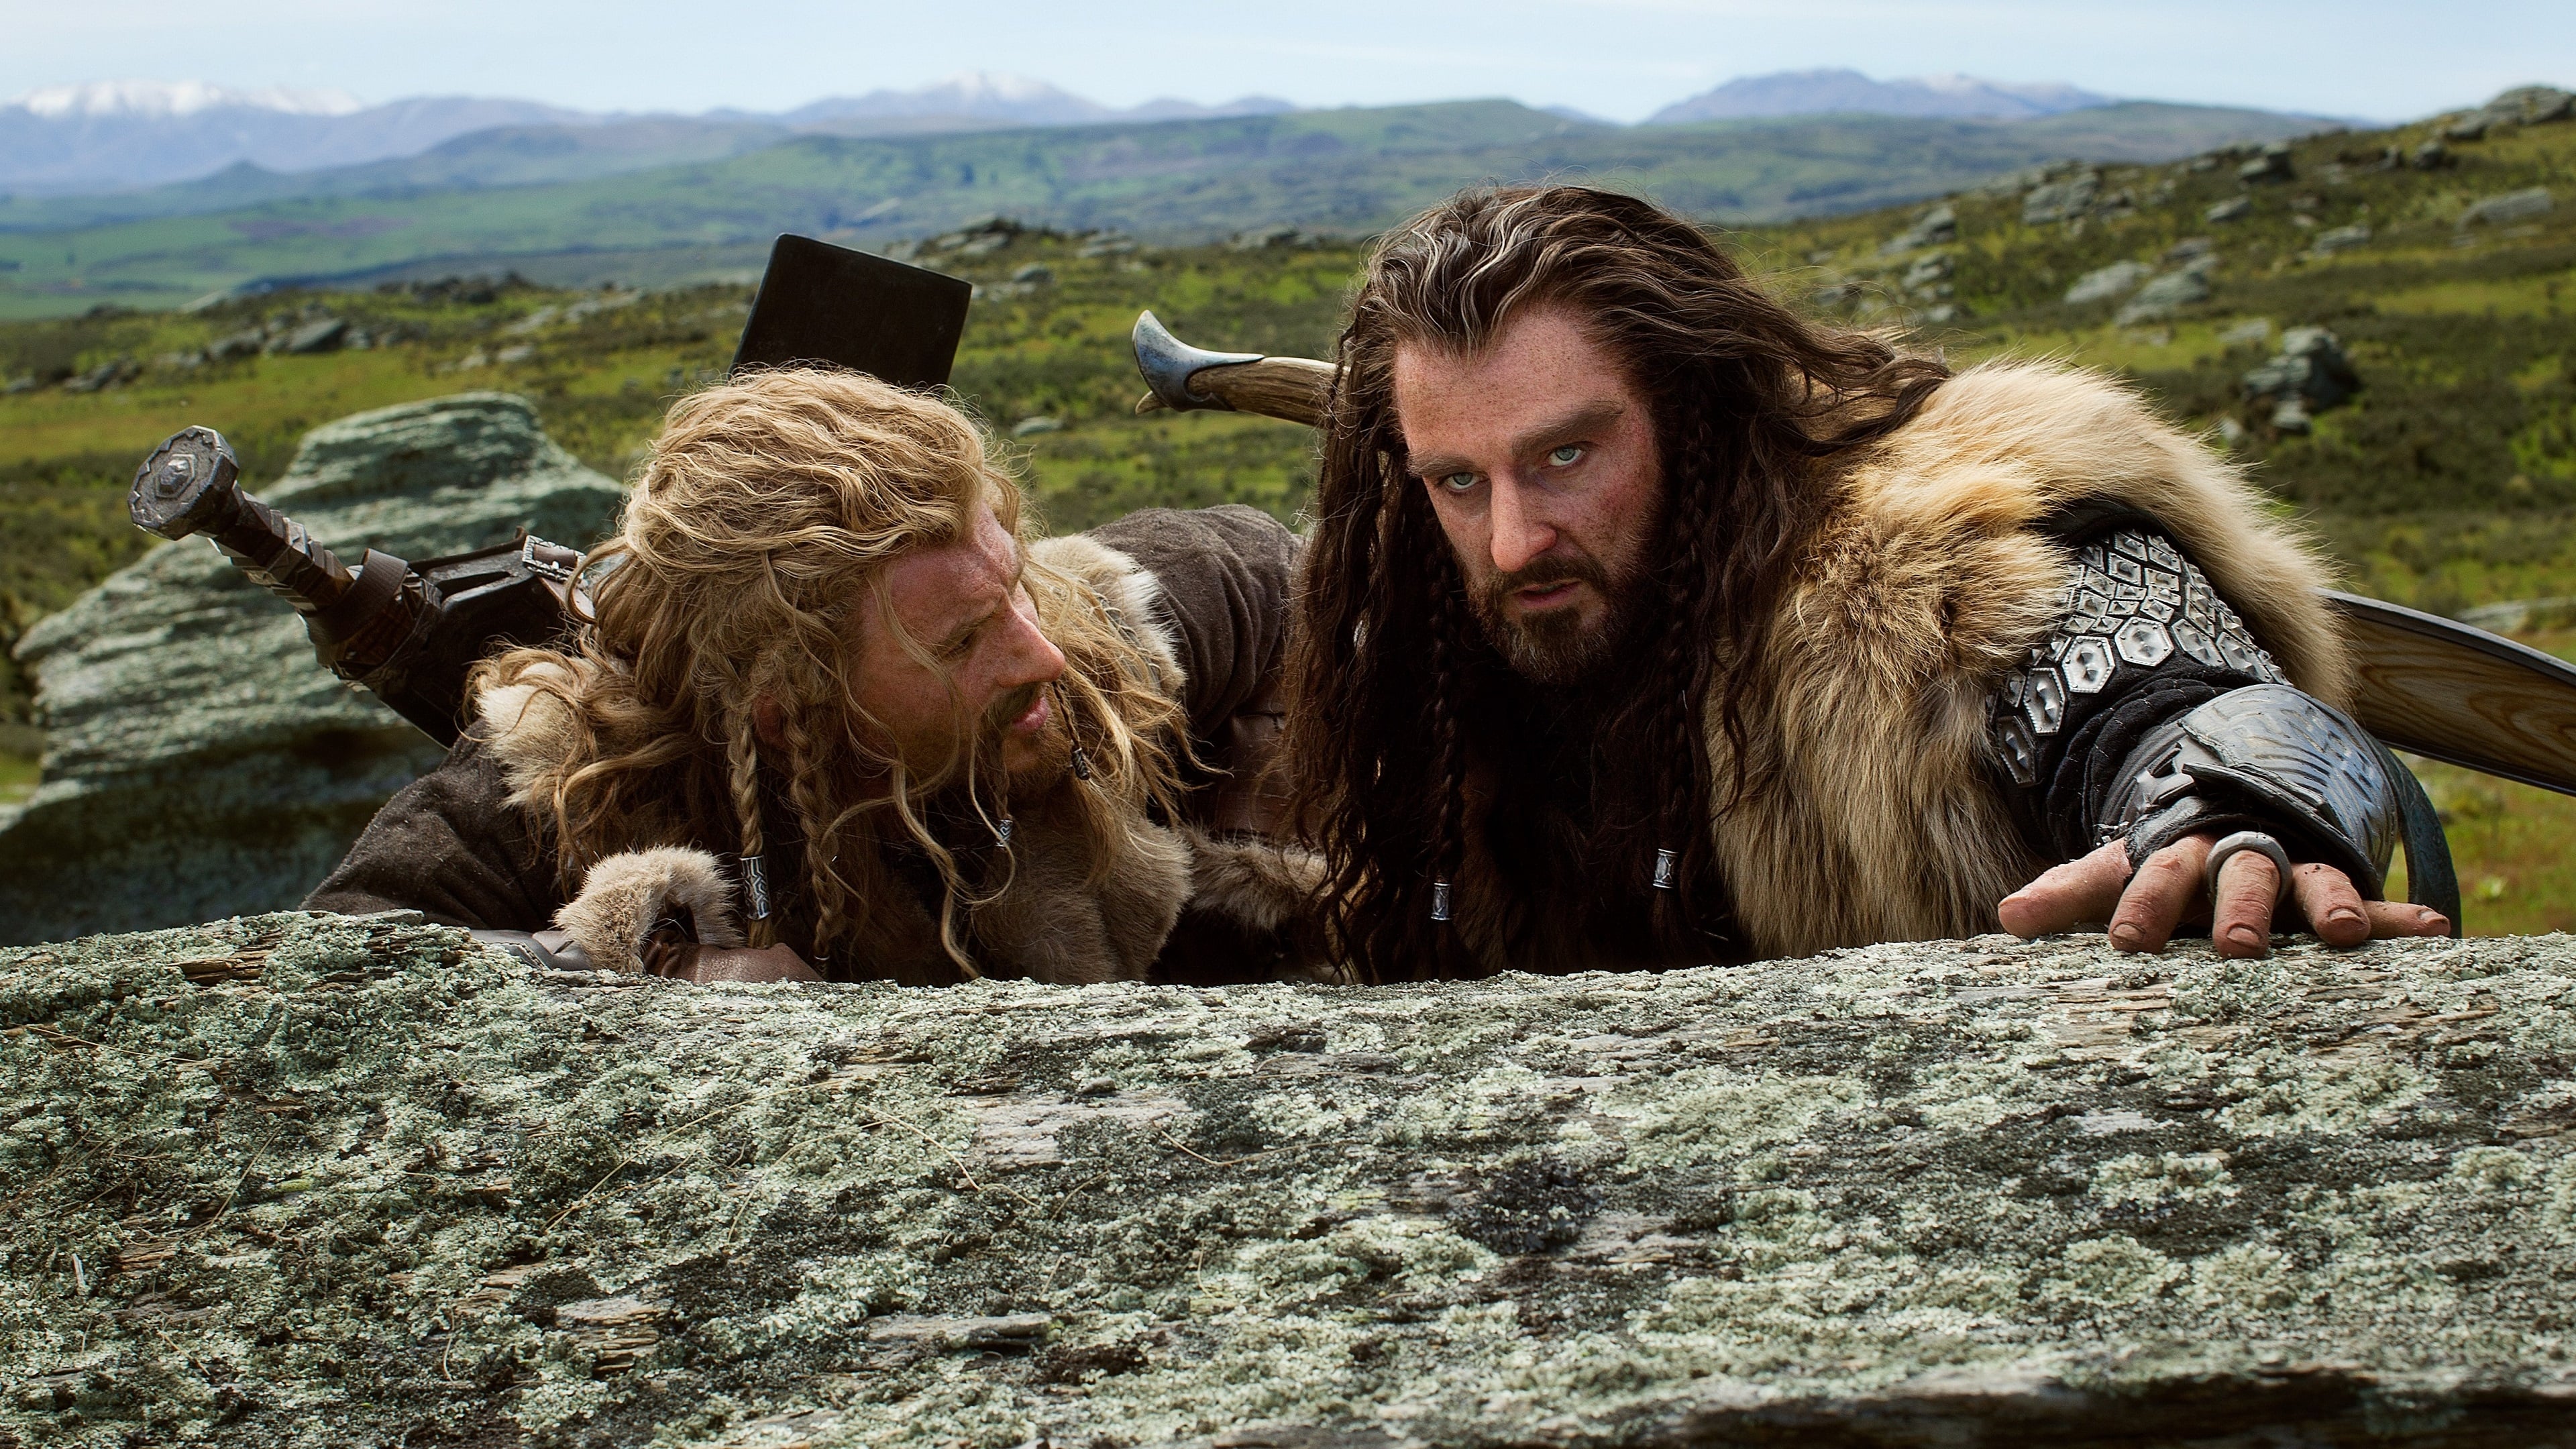 Image du film Le Hobbit : un voyage inattendu (version longue) 6emevphjlllw8s7wfv6ja5ufzdljpg